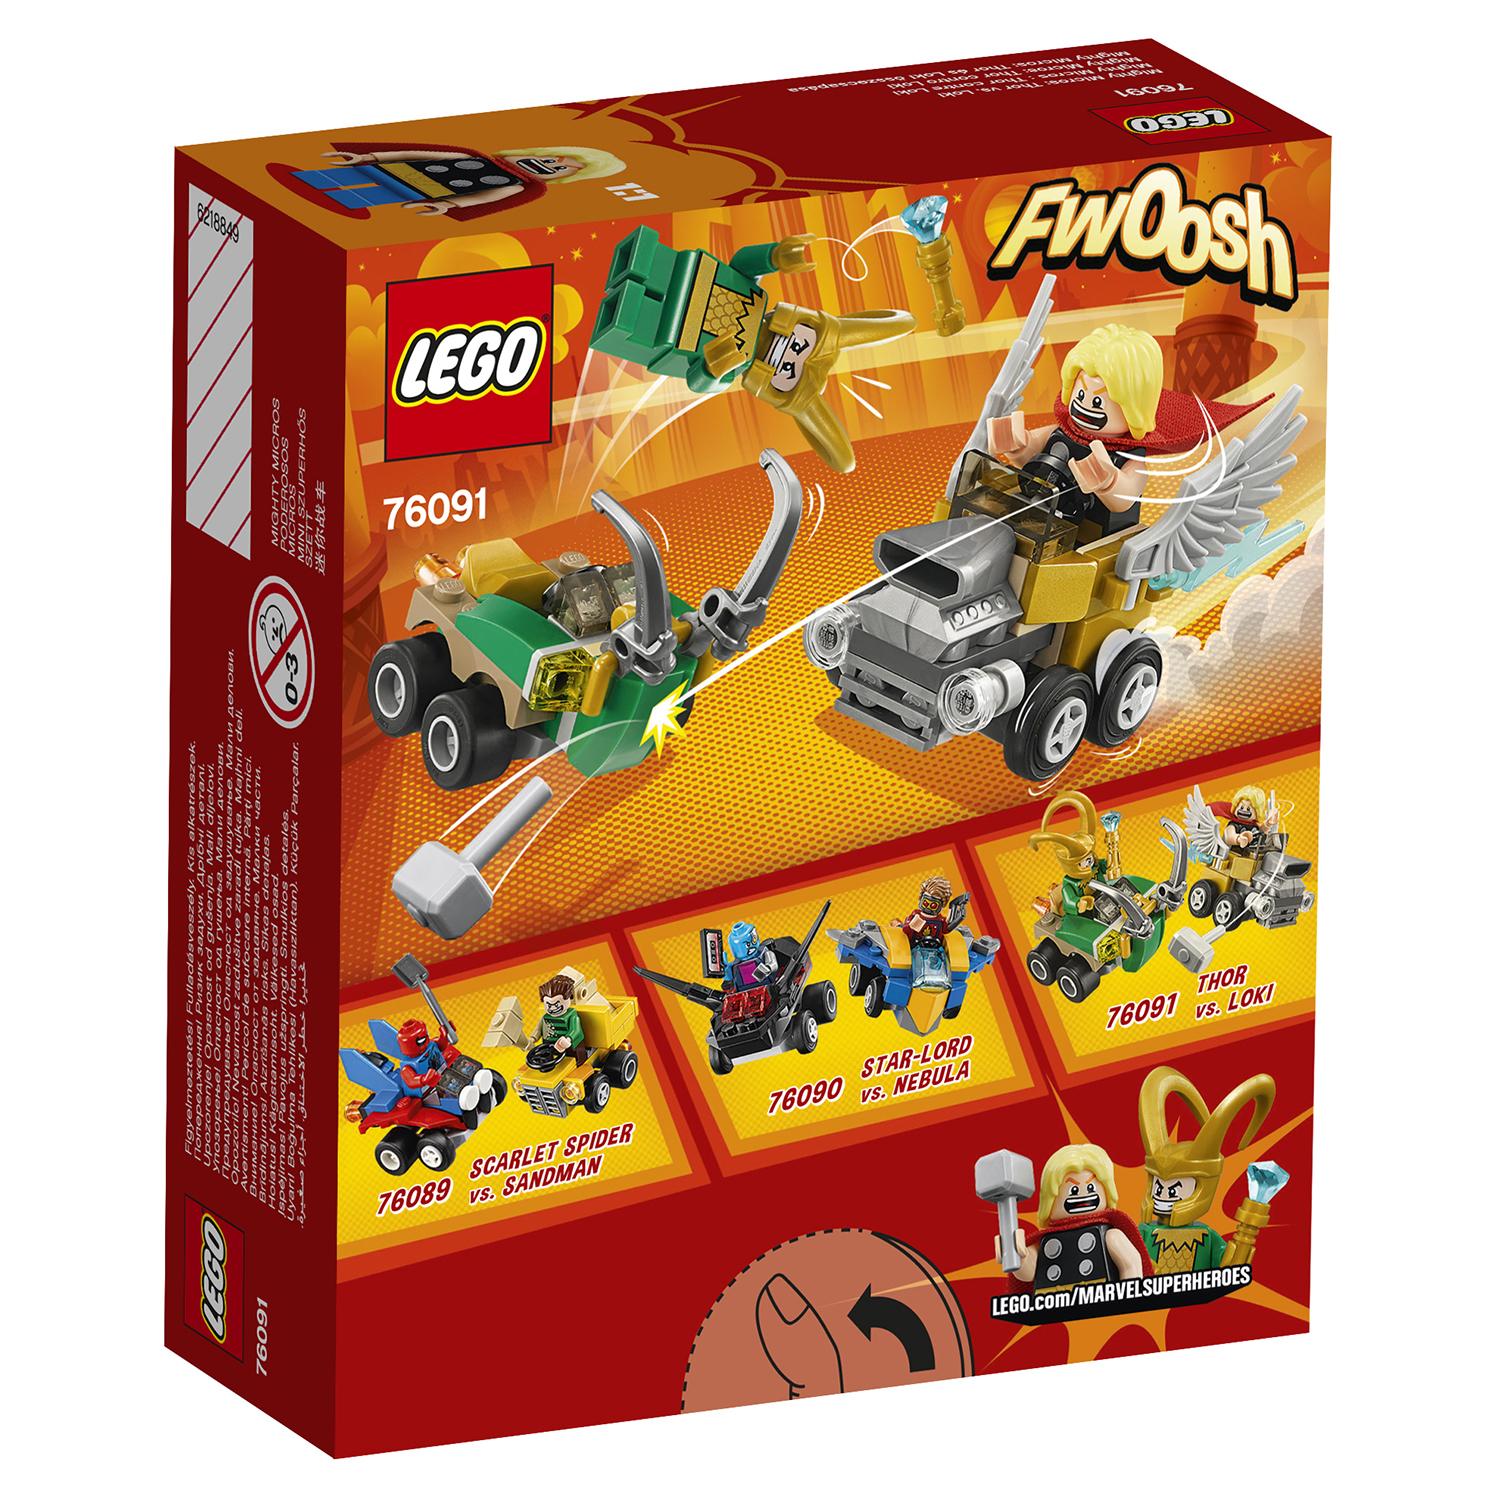 Lego Super Heroes 76091 Mighty Micros Звёздный Тор против Локи